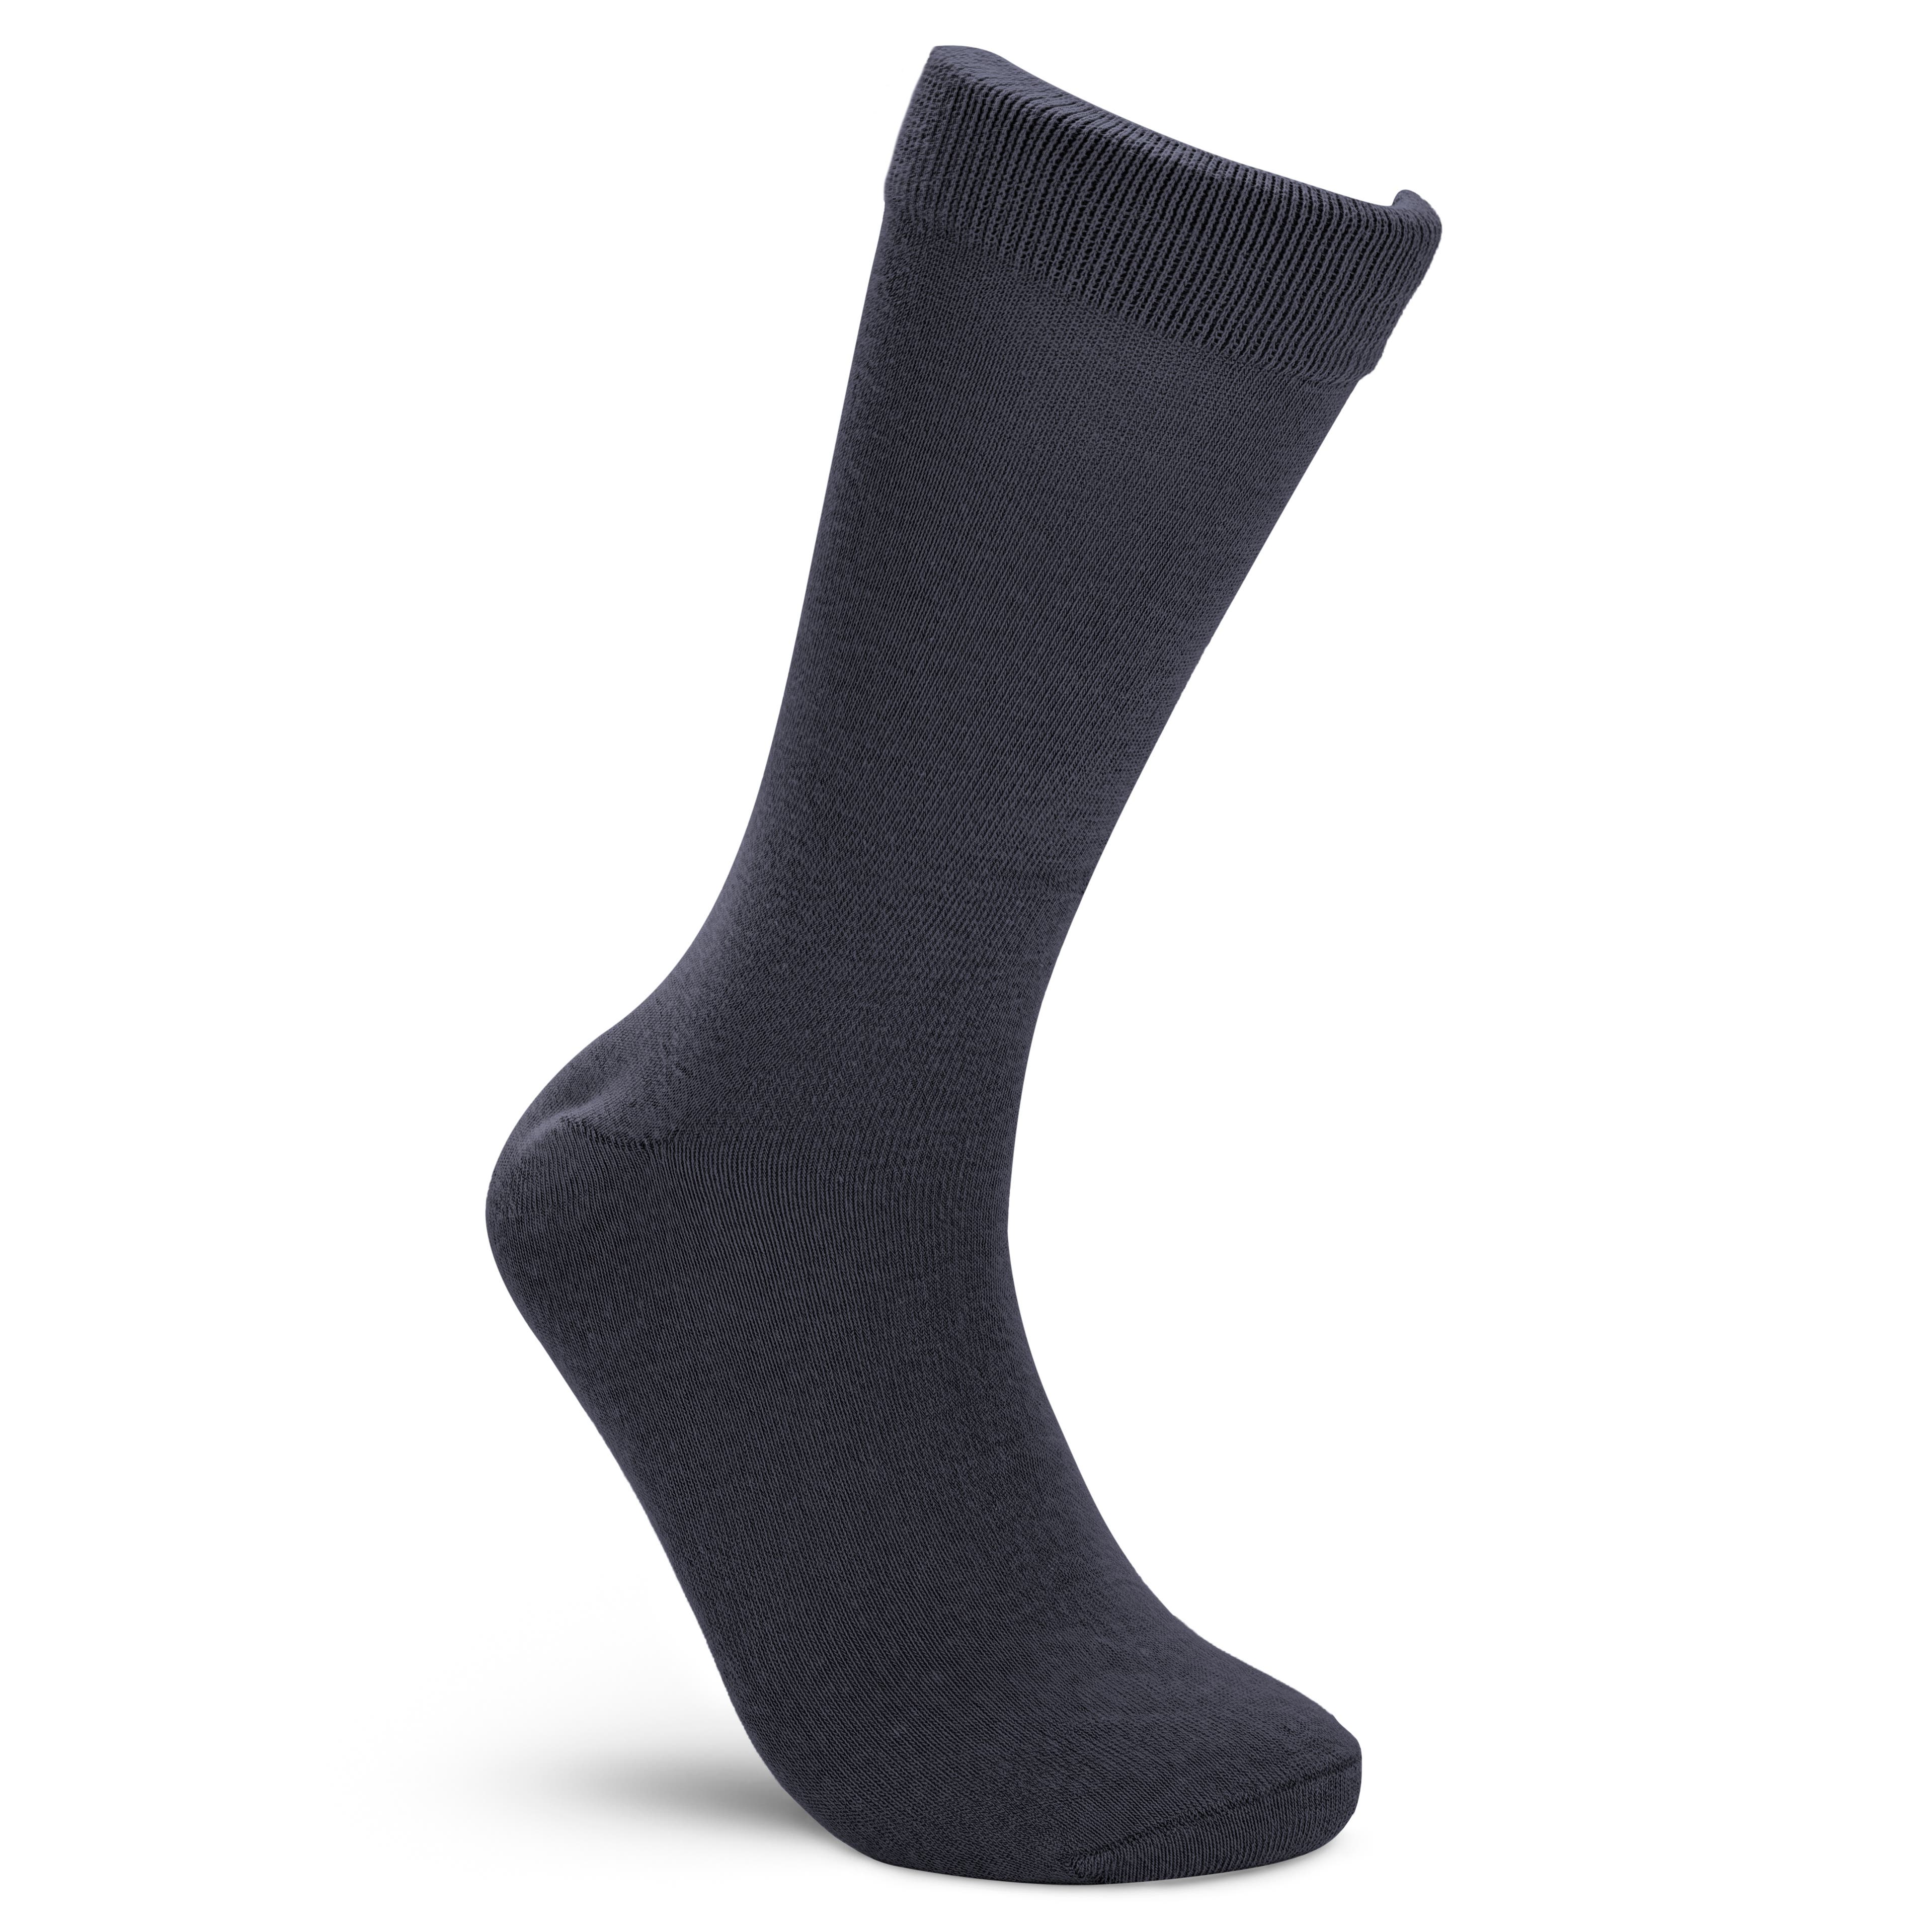 Ligas de calcetines negros para hombre, tirantes de calcetines